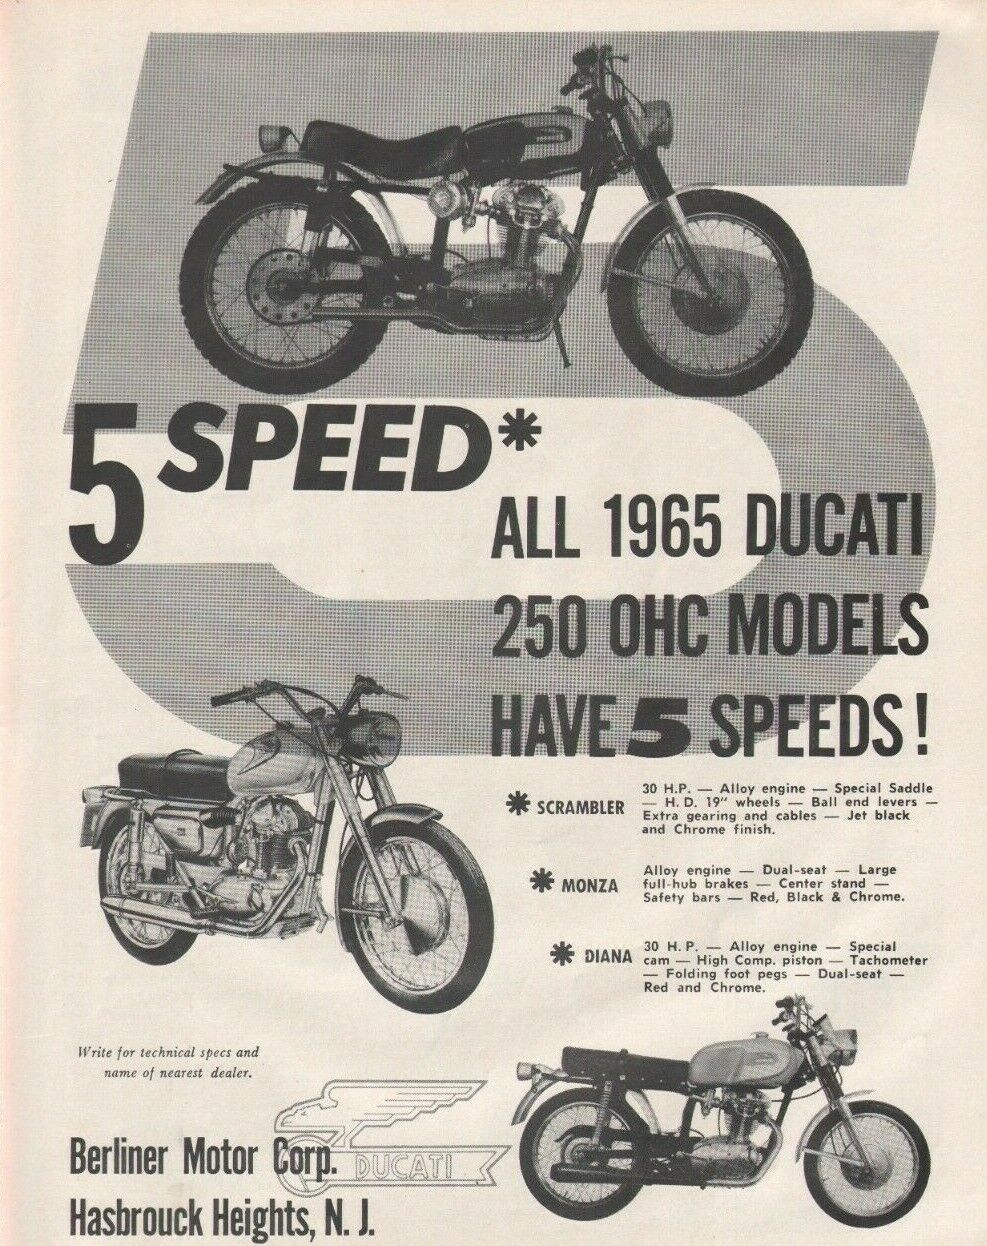 1965 Ducati 250 OHC 5-Speed - Vintage Motorcycle Ad